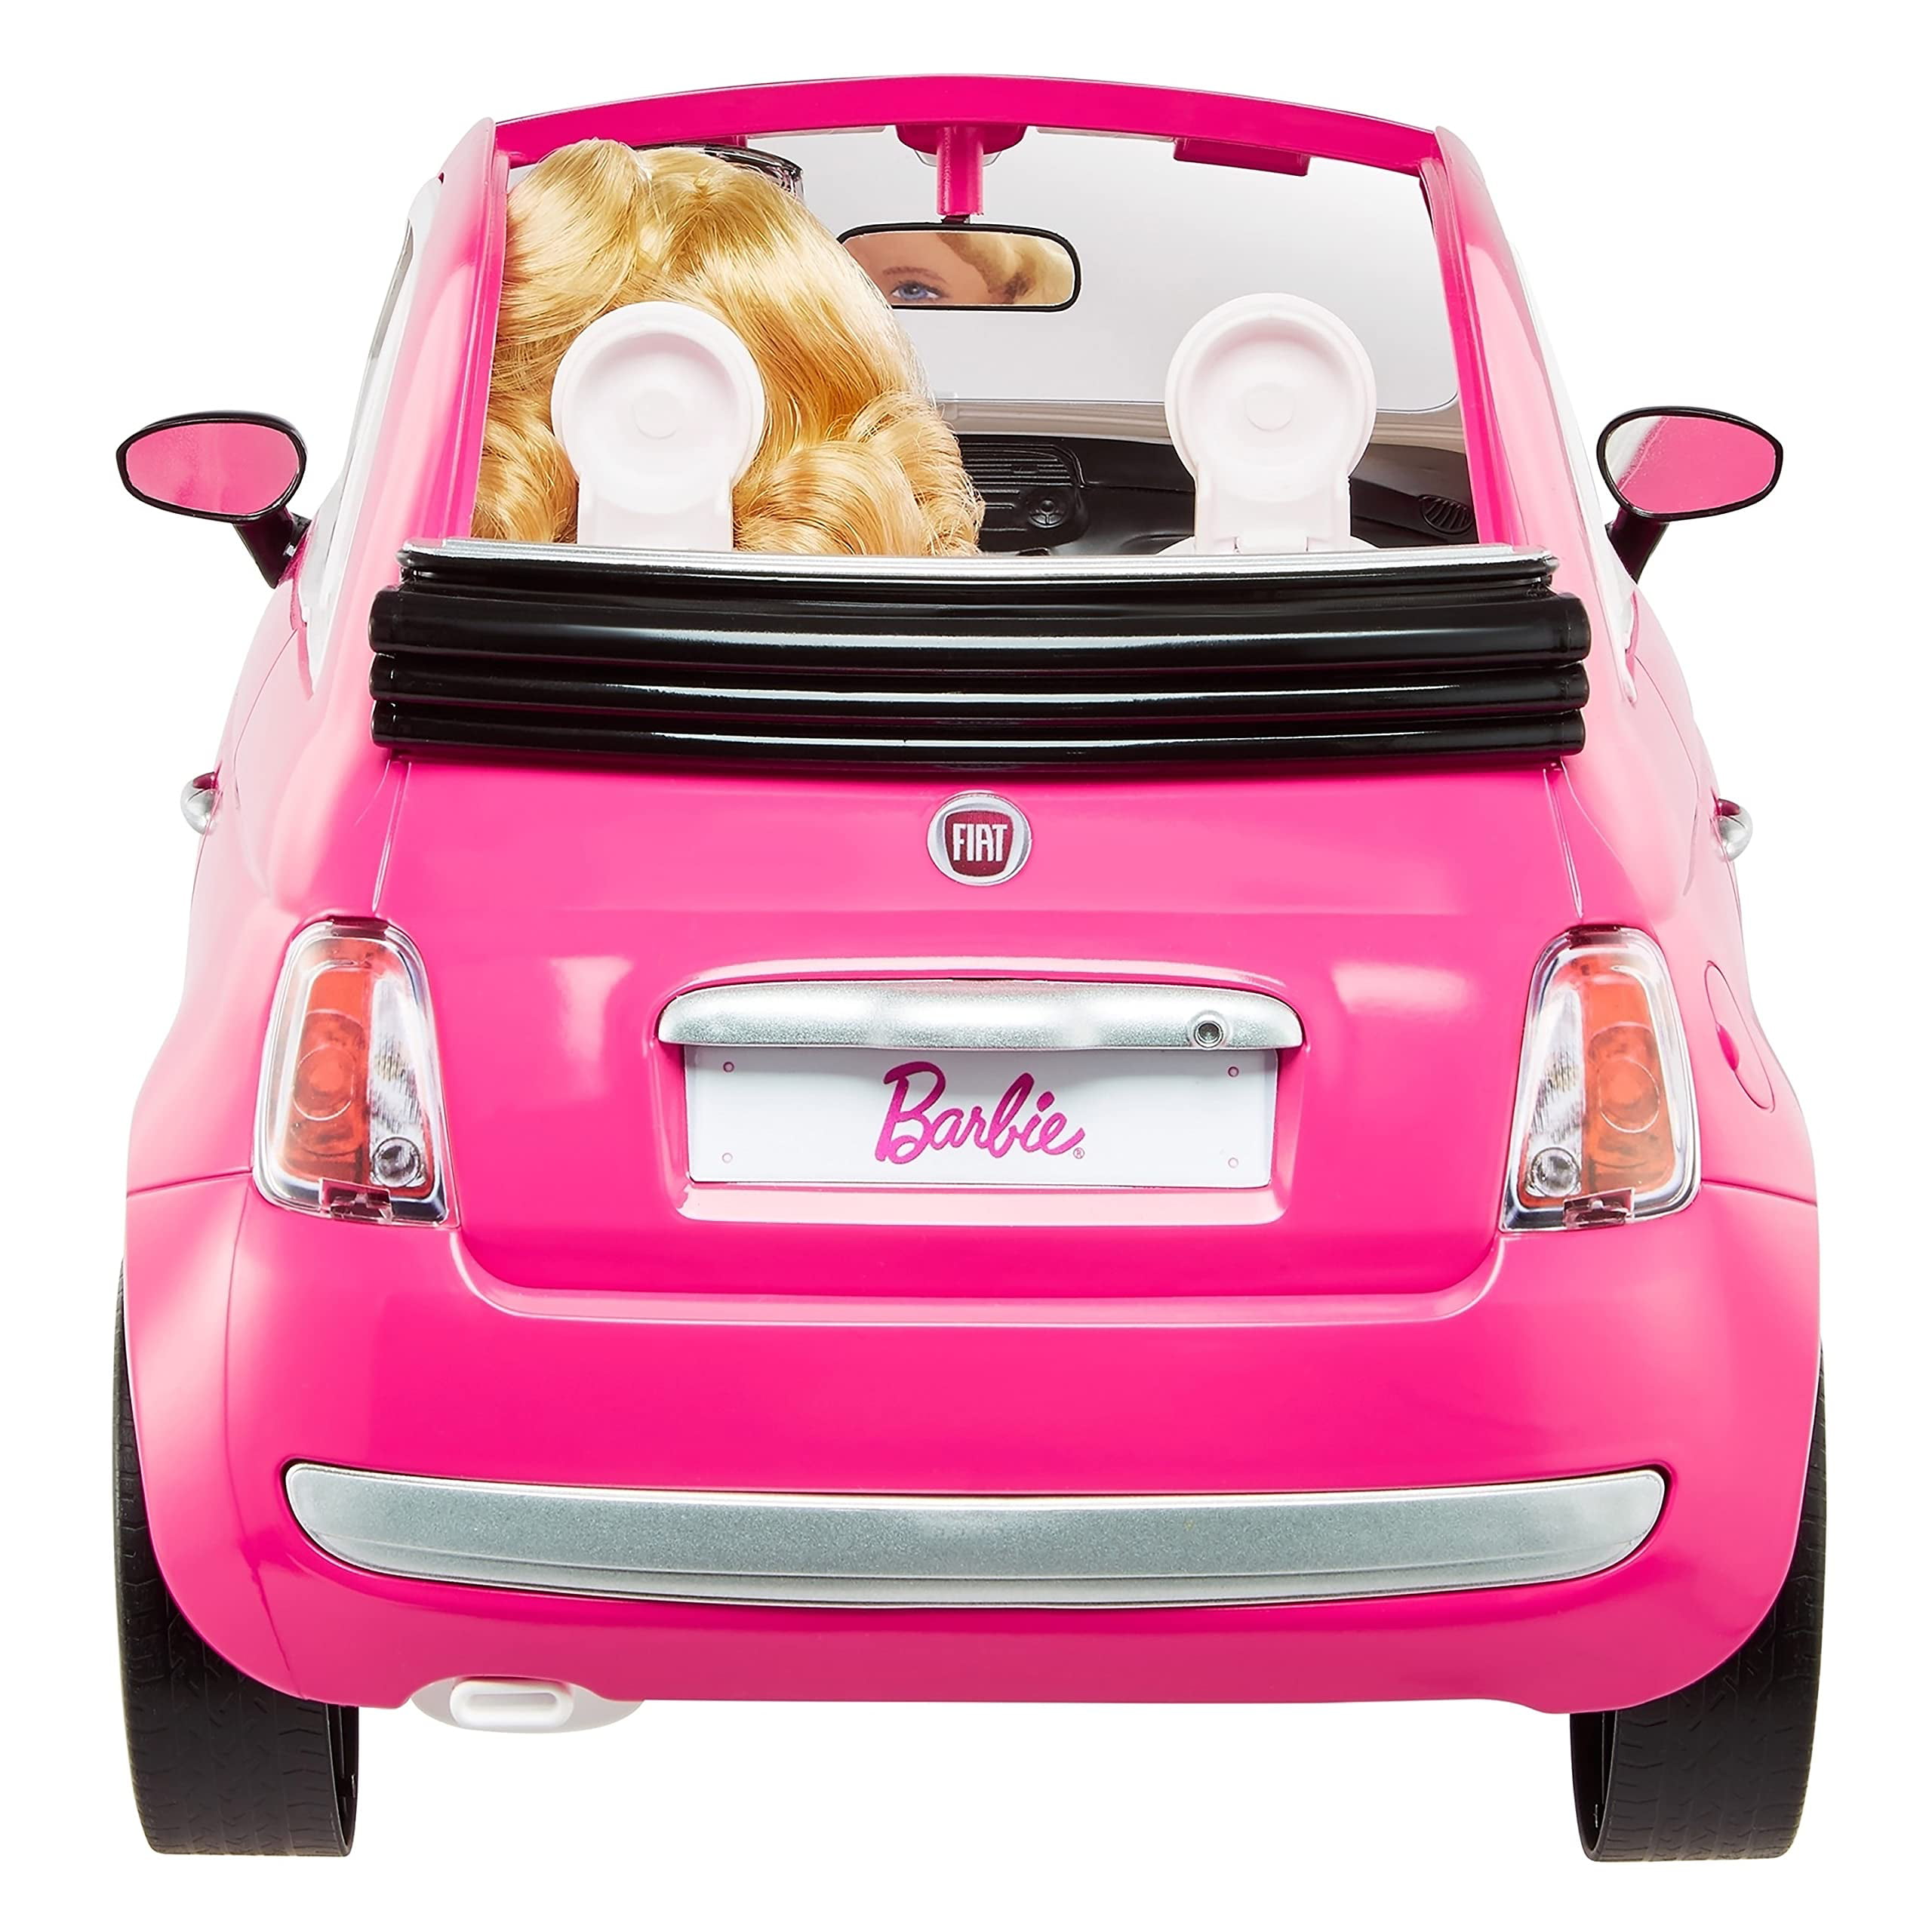 Barbie Fiat 500 Doll and Car Just $20 on Kohls.com (Regularly $40